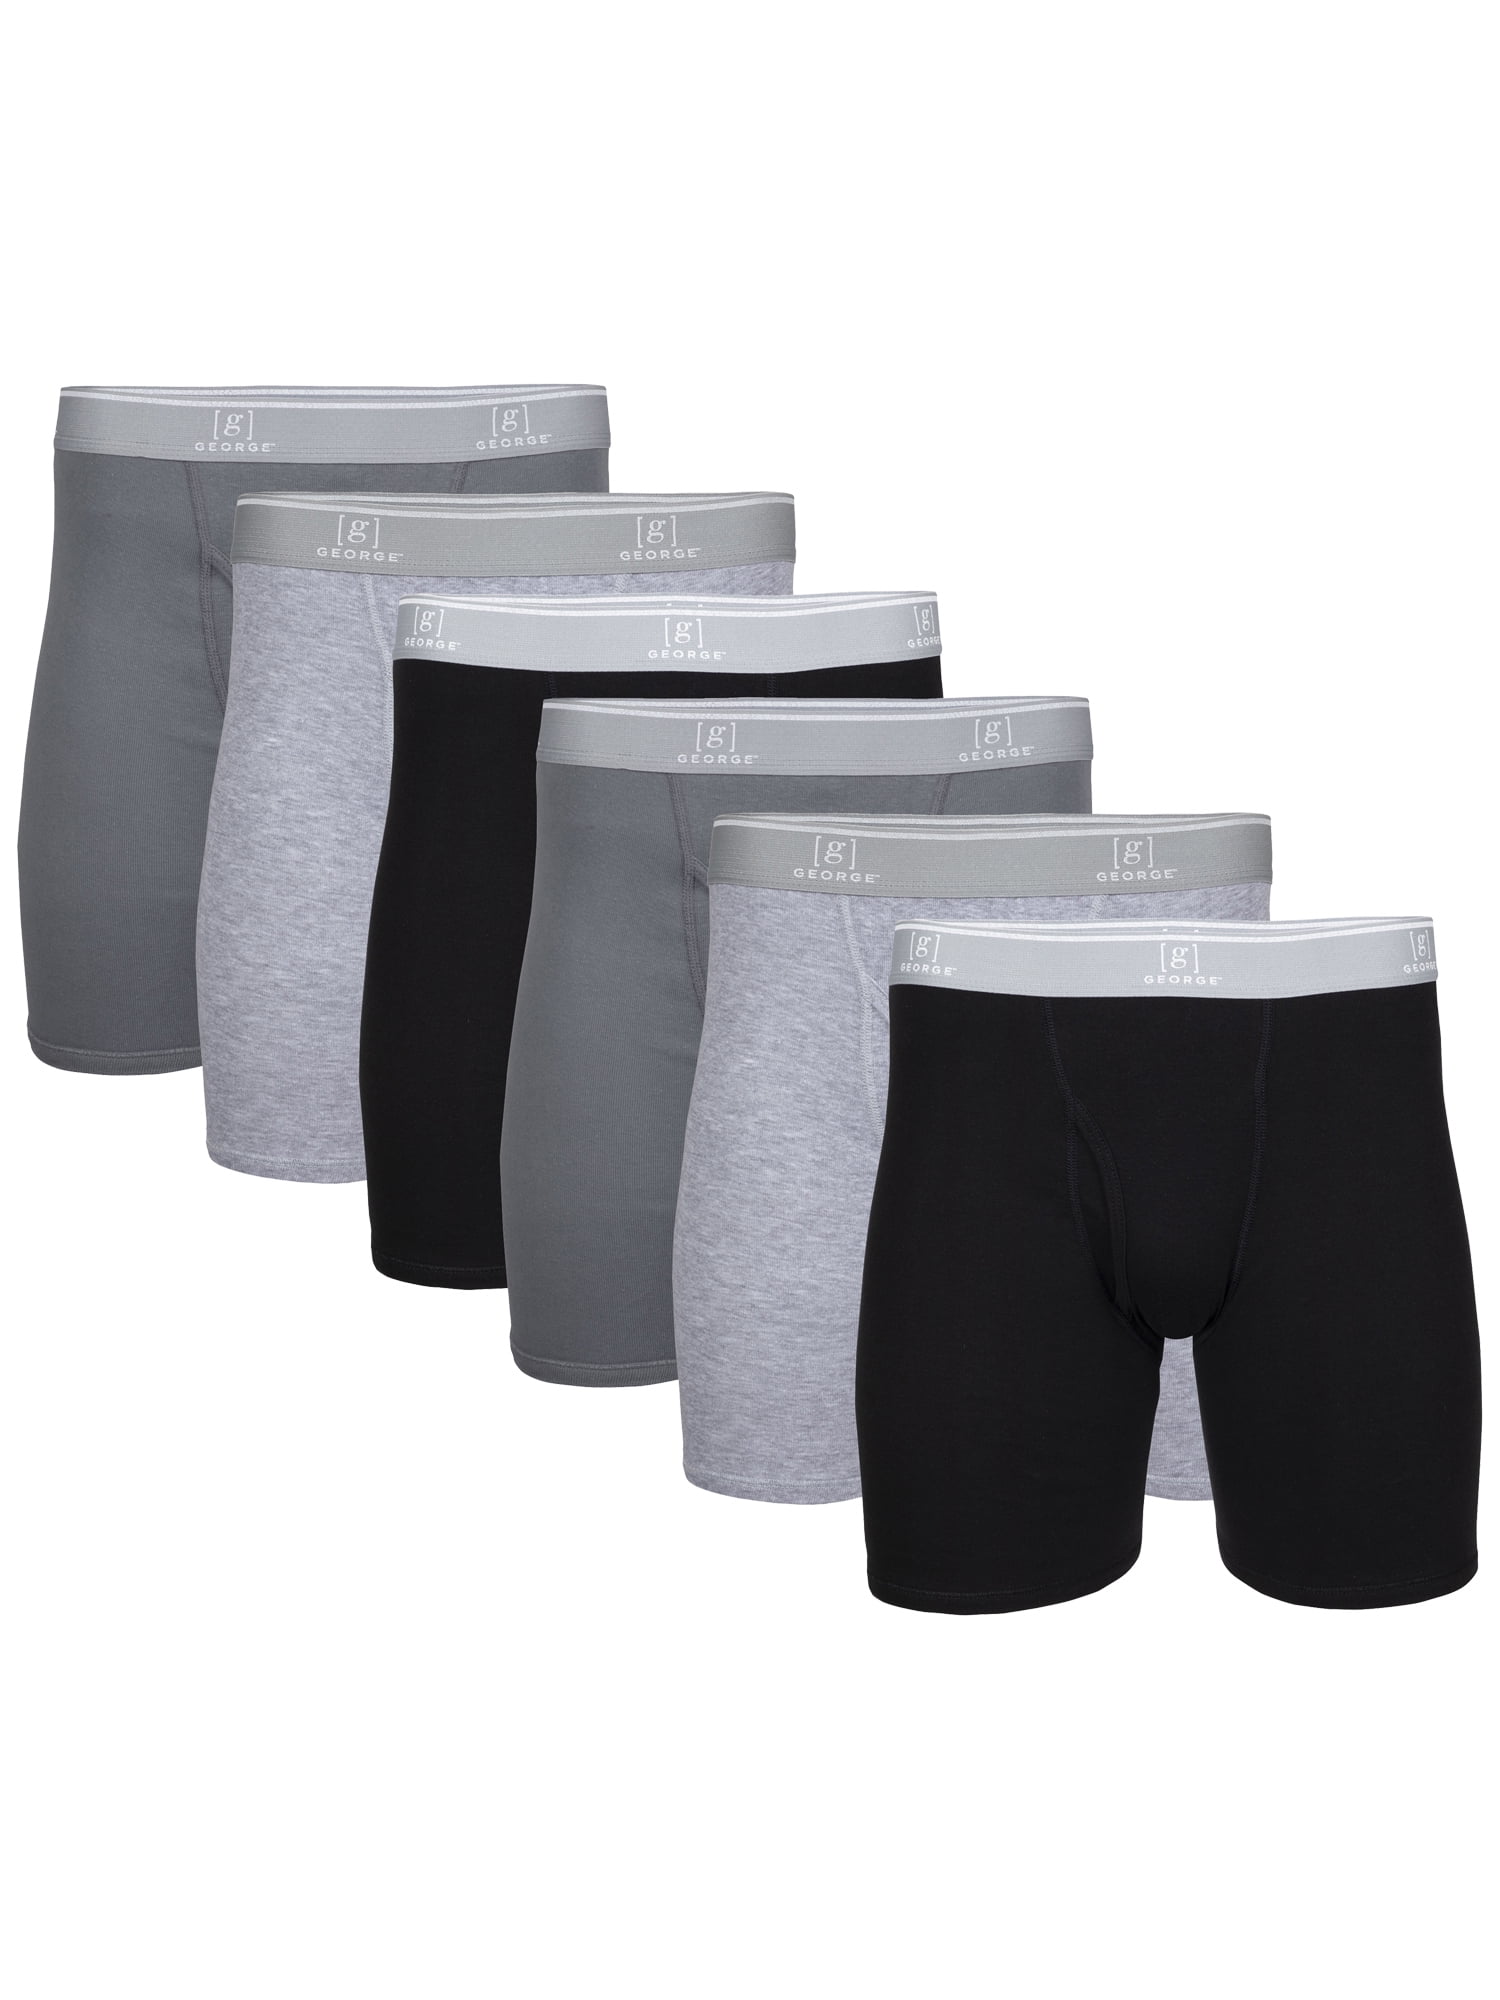 LuLu Ya Store Mens Boxer Underwear Comfortable Sports Long Running Gay Underwear Wear Leg Multi Function Mens Underpants,Multicolor,XL,China